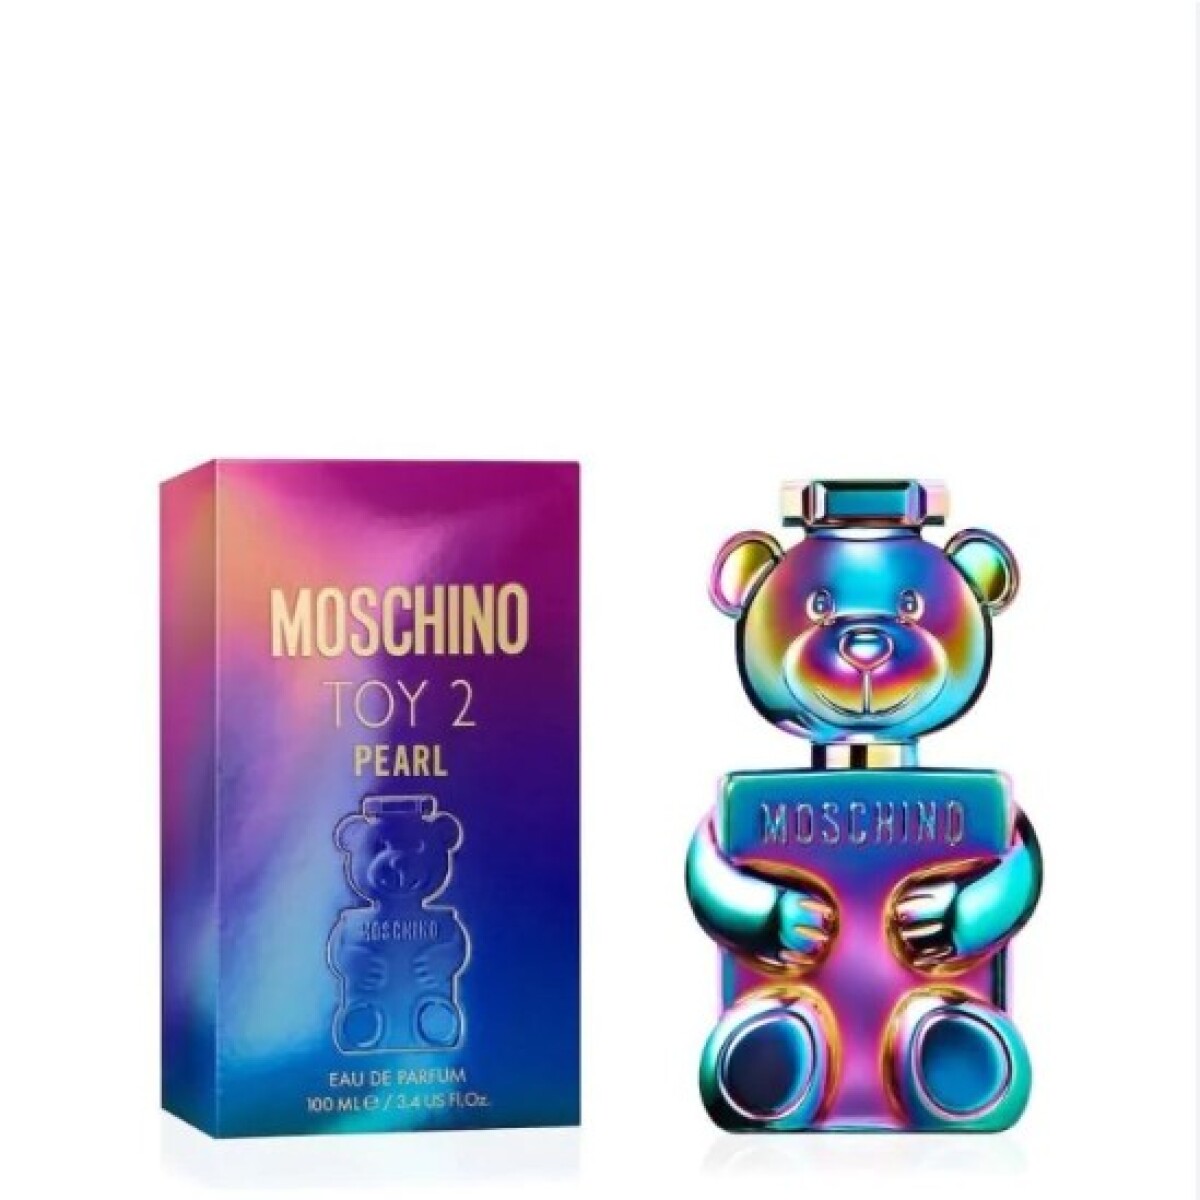 Moschino Toy 2 Pearl edp - 100 ml 